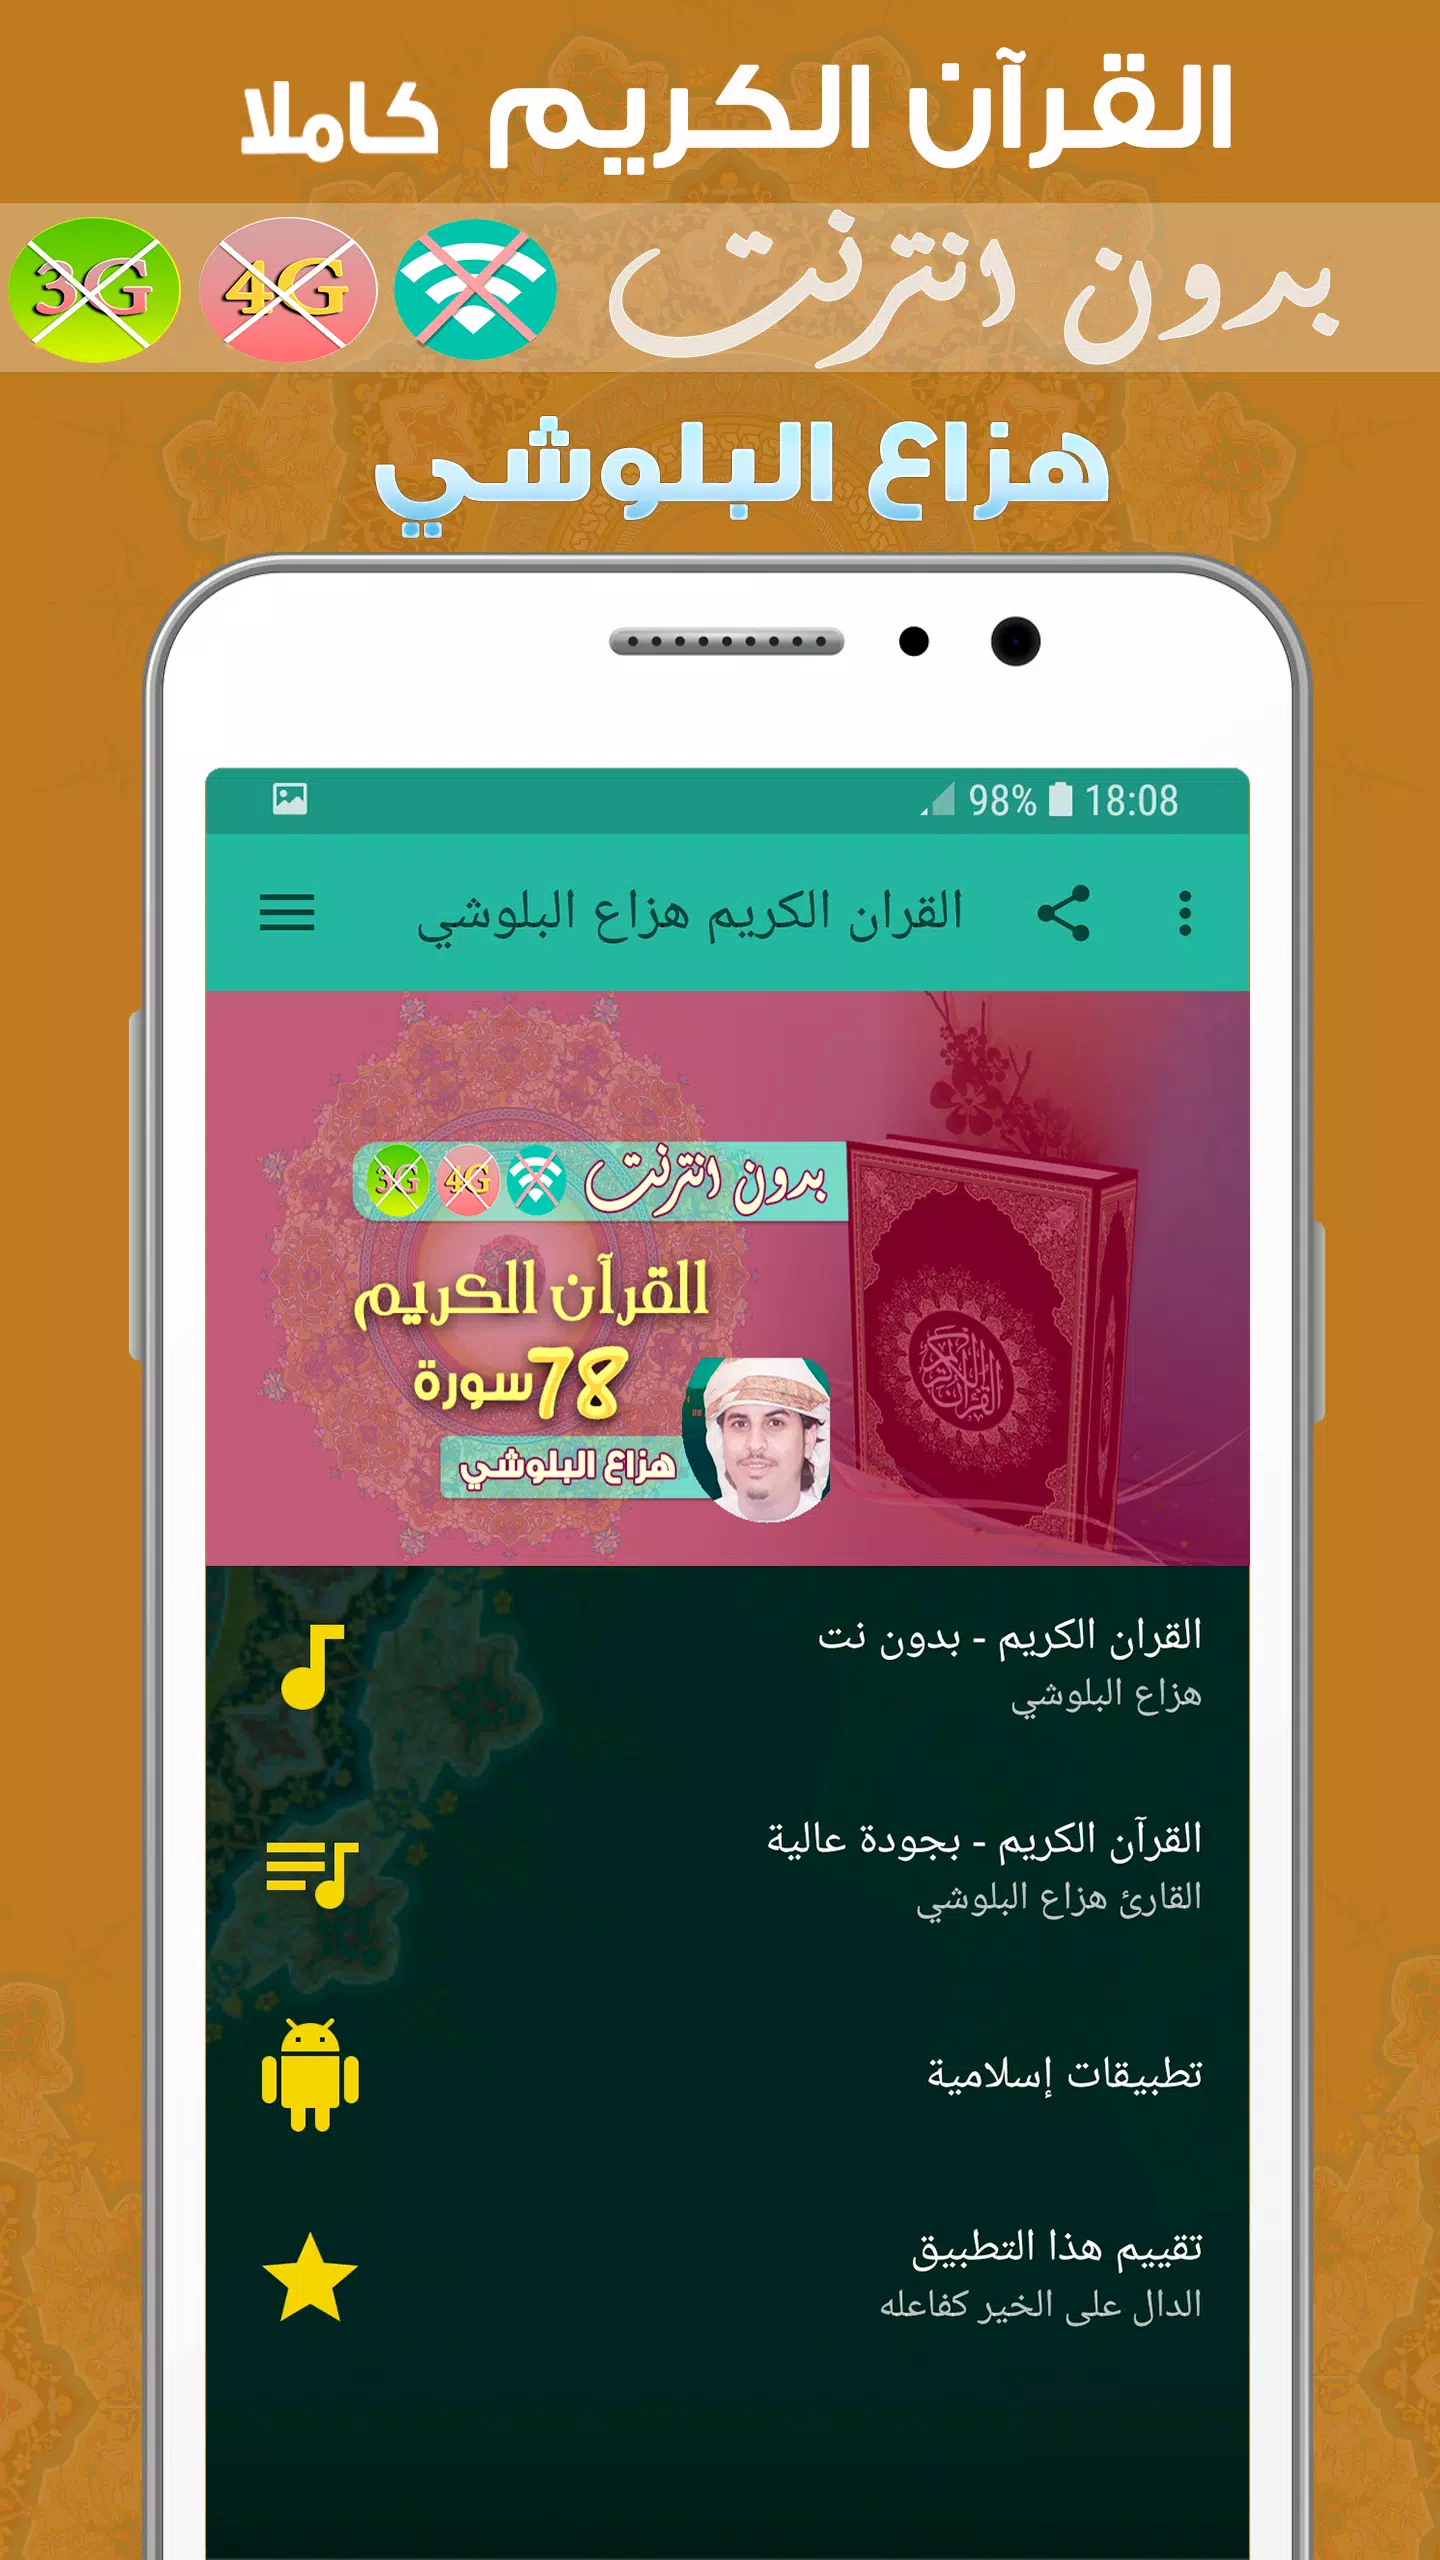 Hazza Al Balushi Quran MP3 Offline APK for Android Download